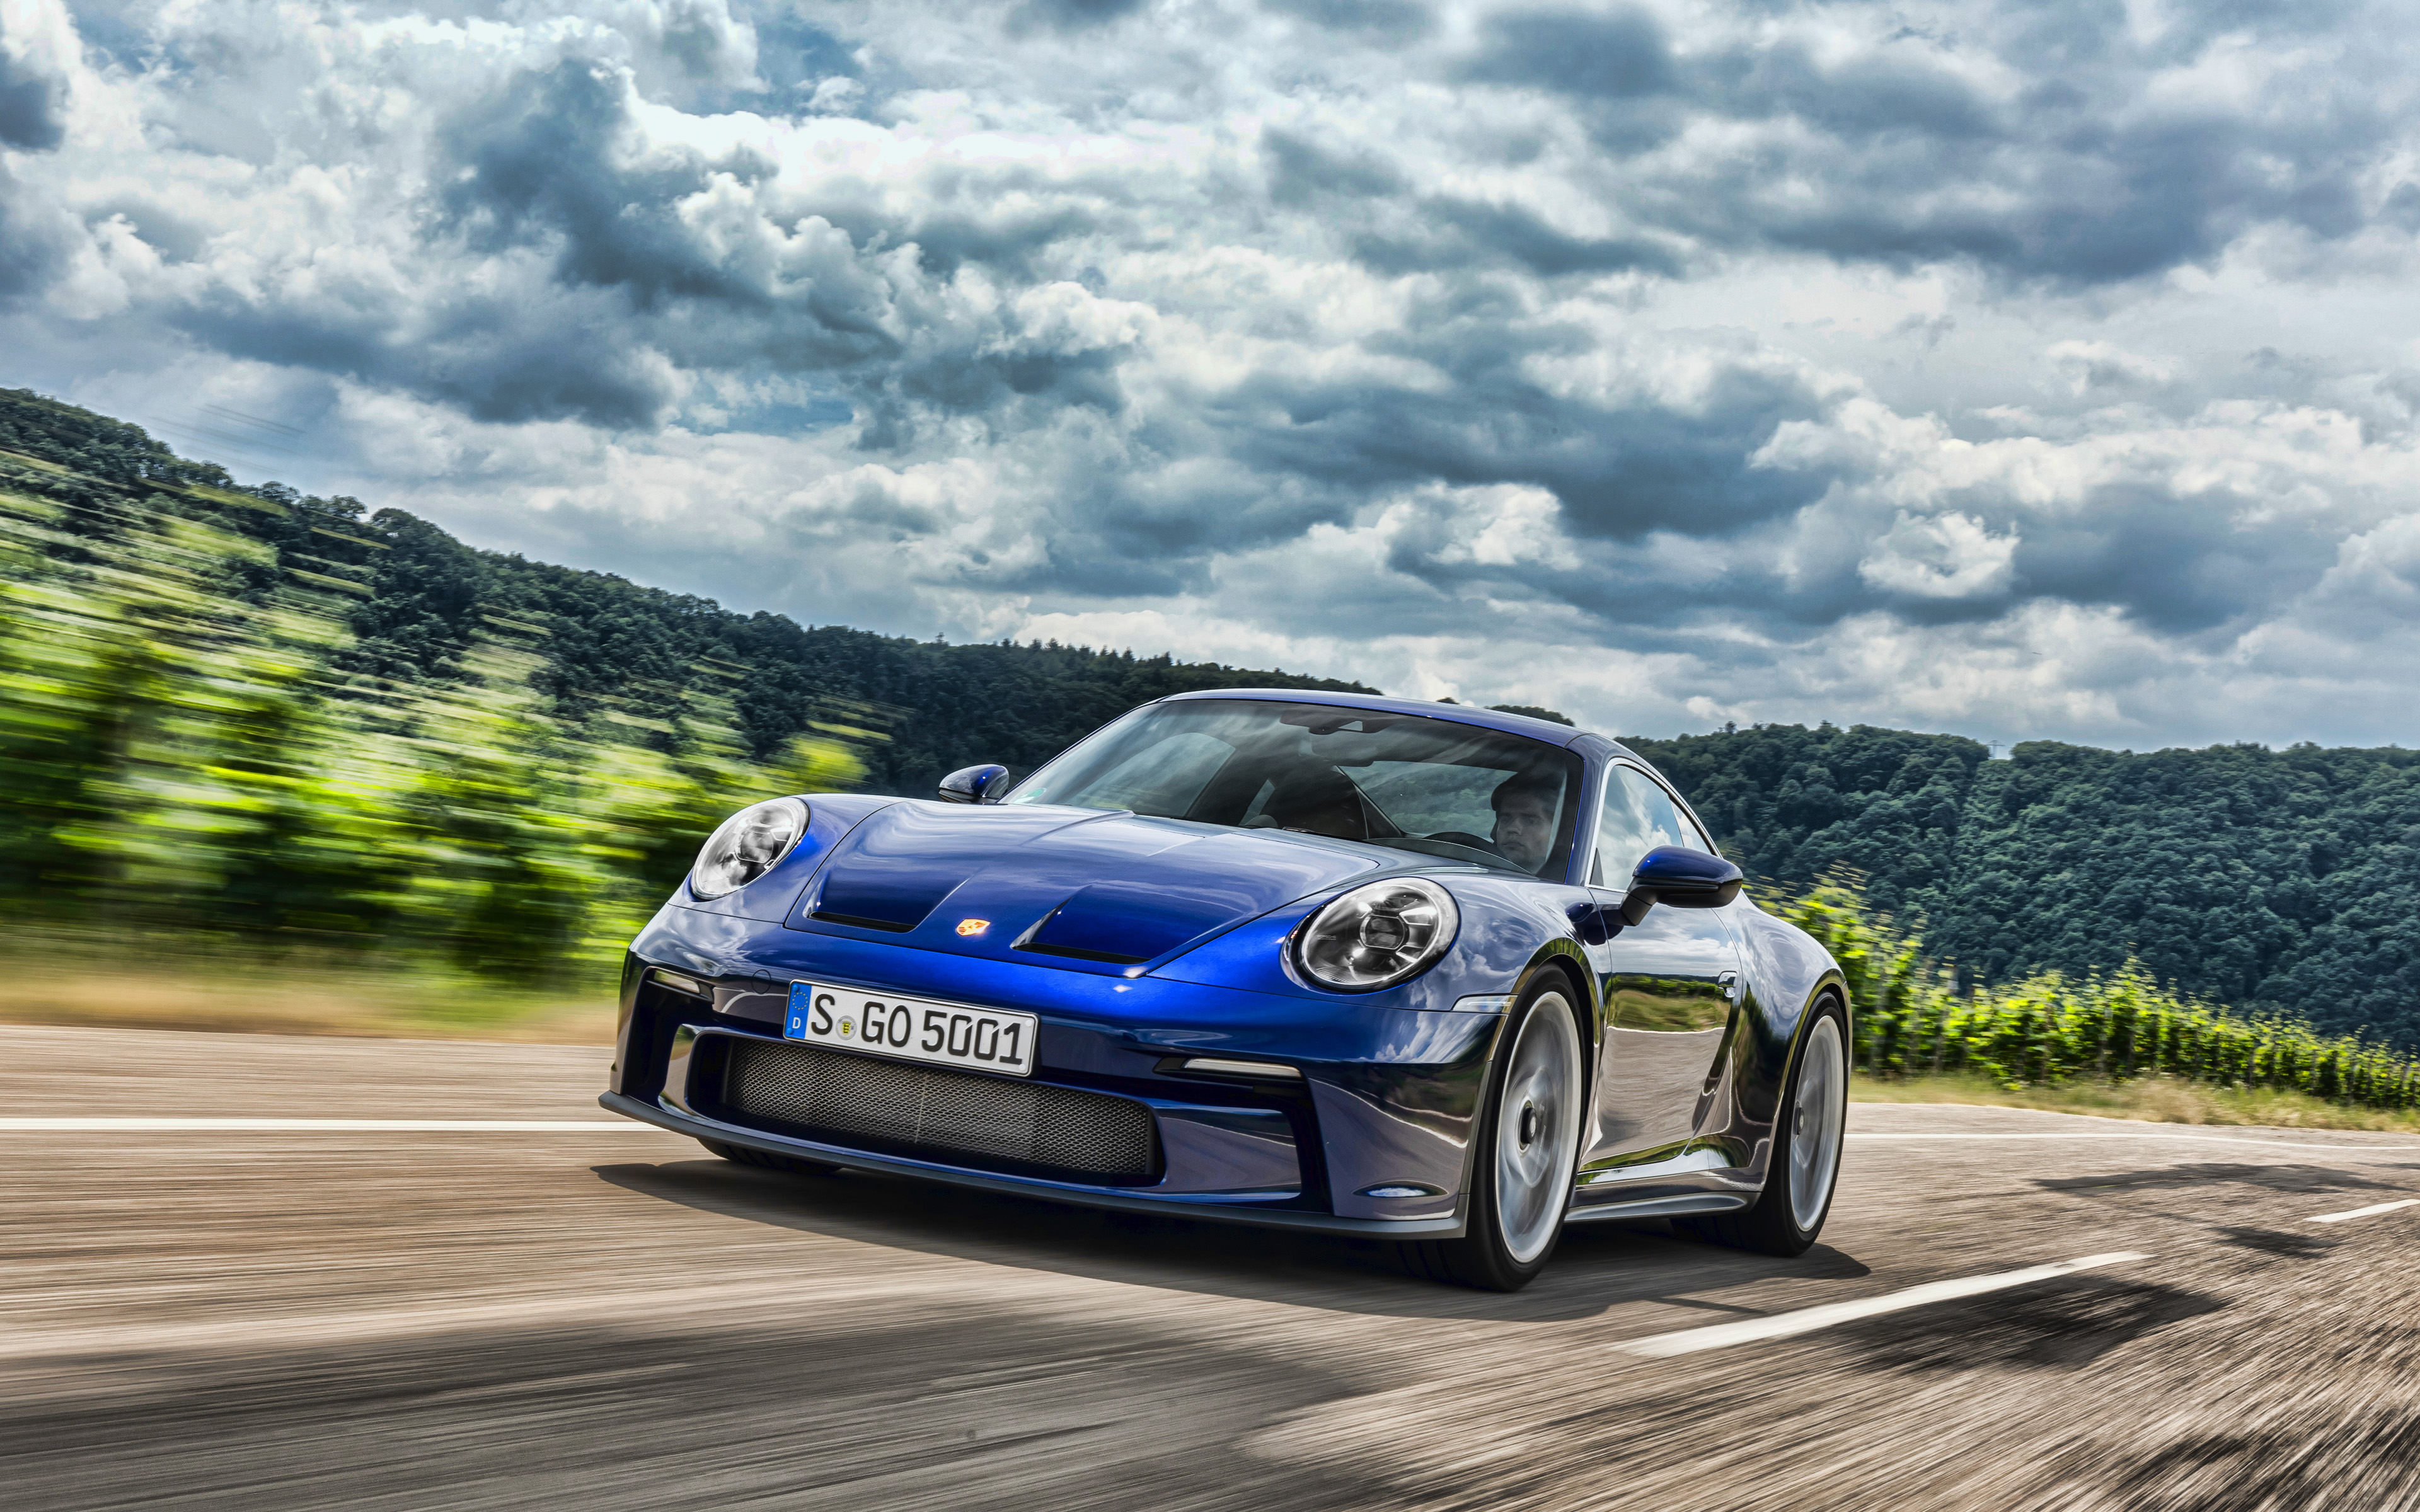 Download wallpaper Porsche 911 GT3 Touring PDK, 4k, HDR, 2021 cars, supercars, highway, 2021 Porsche 911 GT german cars, Porsche for desktop with resolution 3840x2400. High Quality HD picture wallpaper